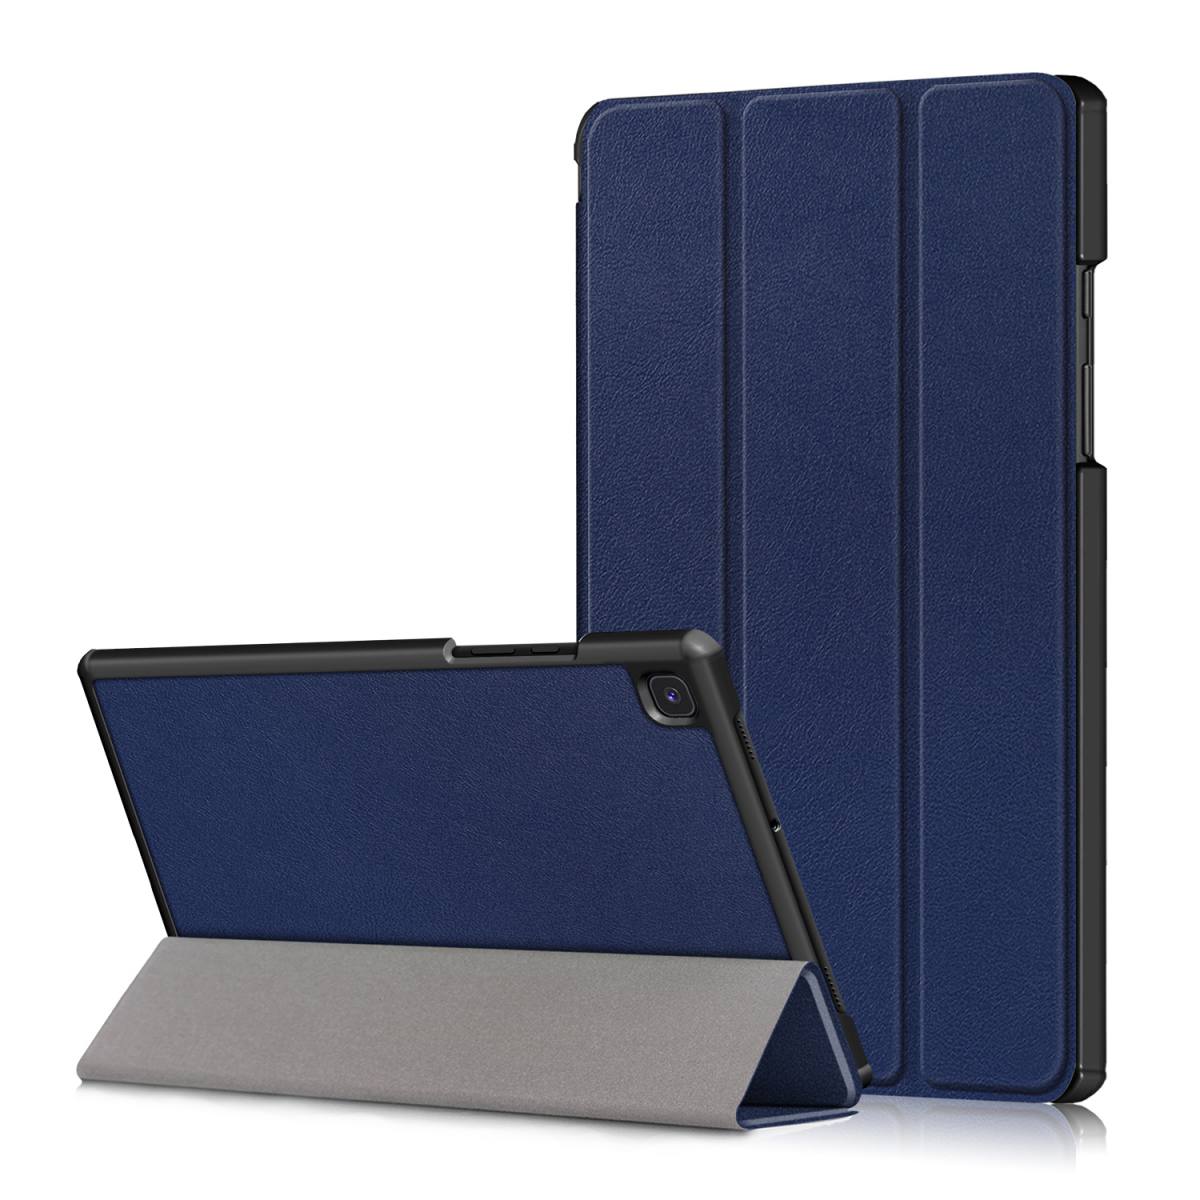 Чехол IT Baggage для Galaxy Tab A7 10.4 2020 T505/T500/T507 Blue ITSSA7104-4 модный чехол для планшета samsung galaxy tab a7 t500 2020 10 4 дюйма для samsung tab a7 t500 футляр для карт защитный чехол с откидной крышкой